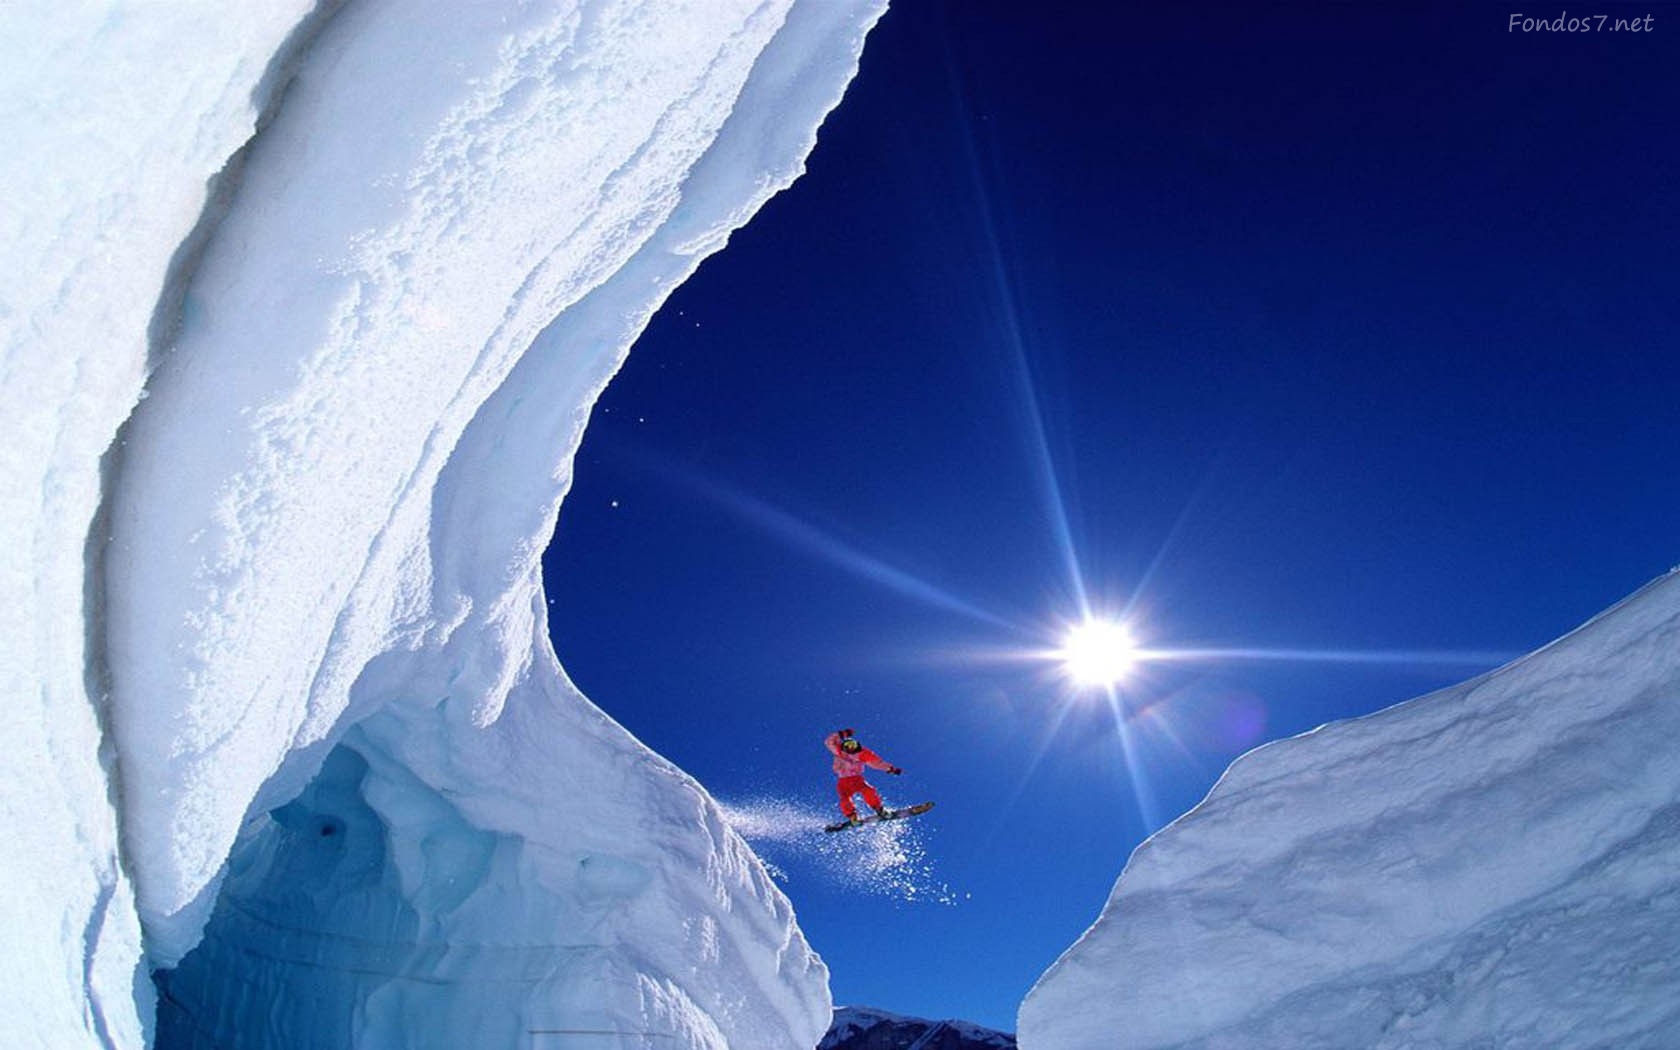 Snowboarding Extreme